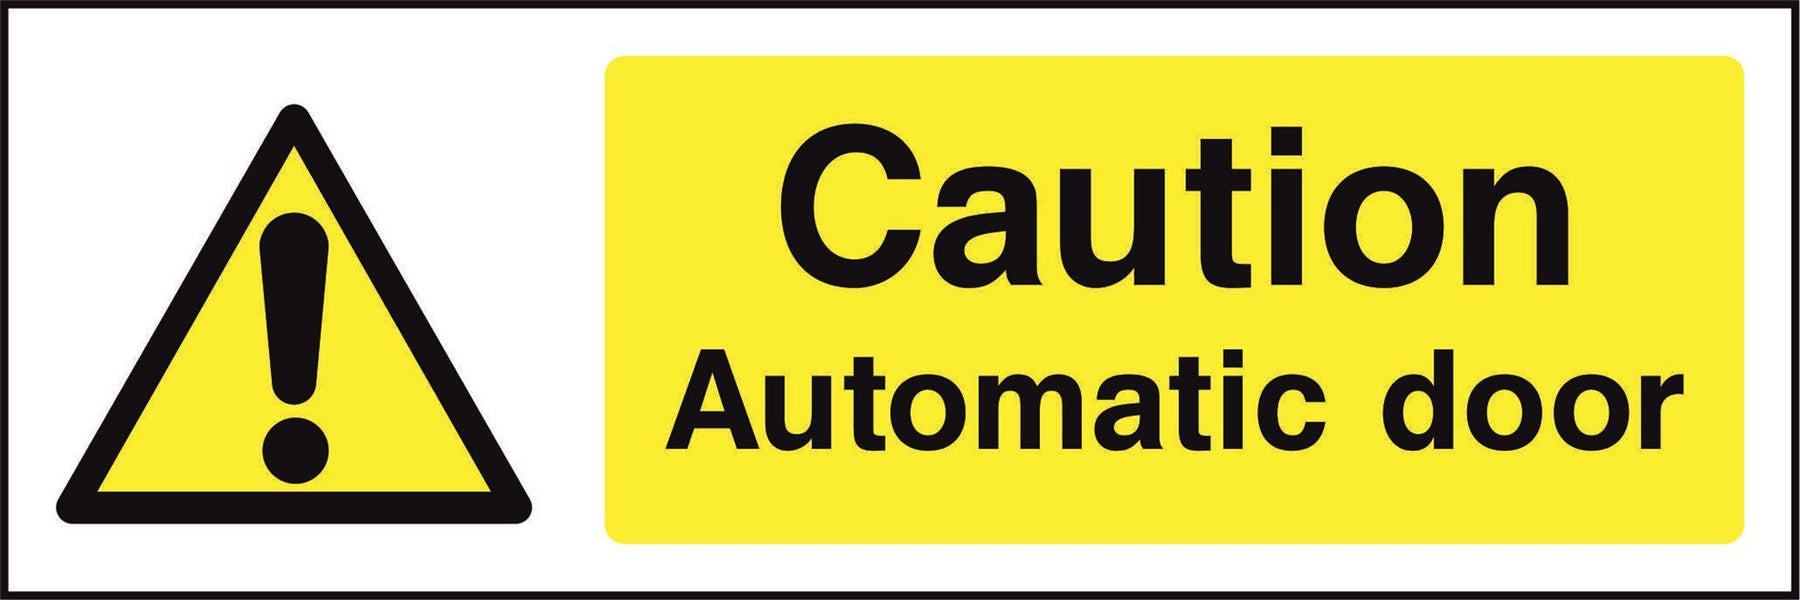 Caution Automatic door